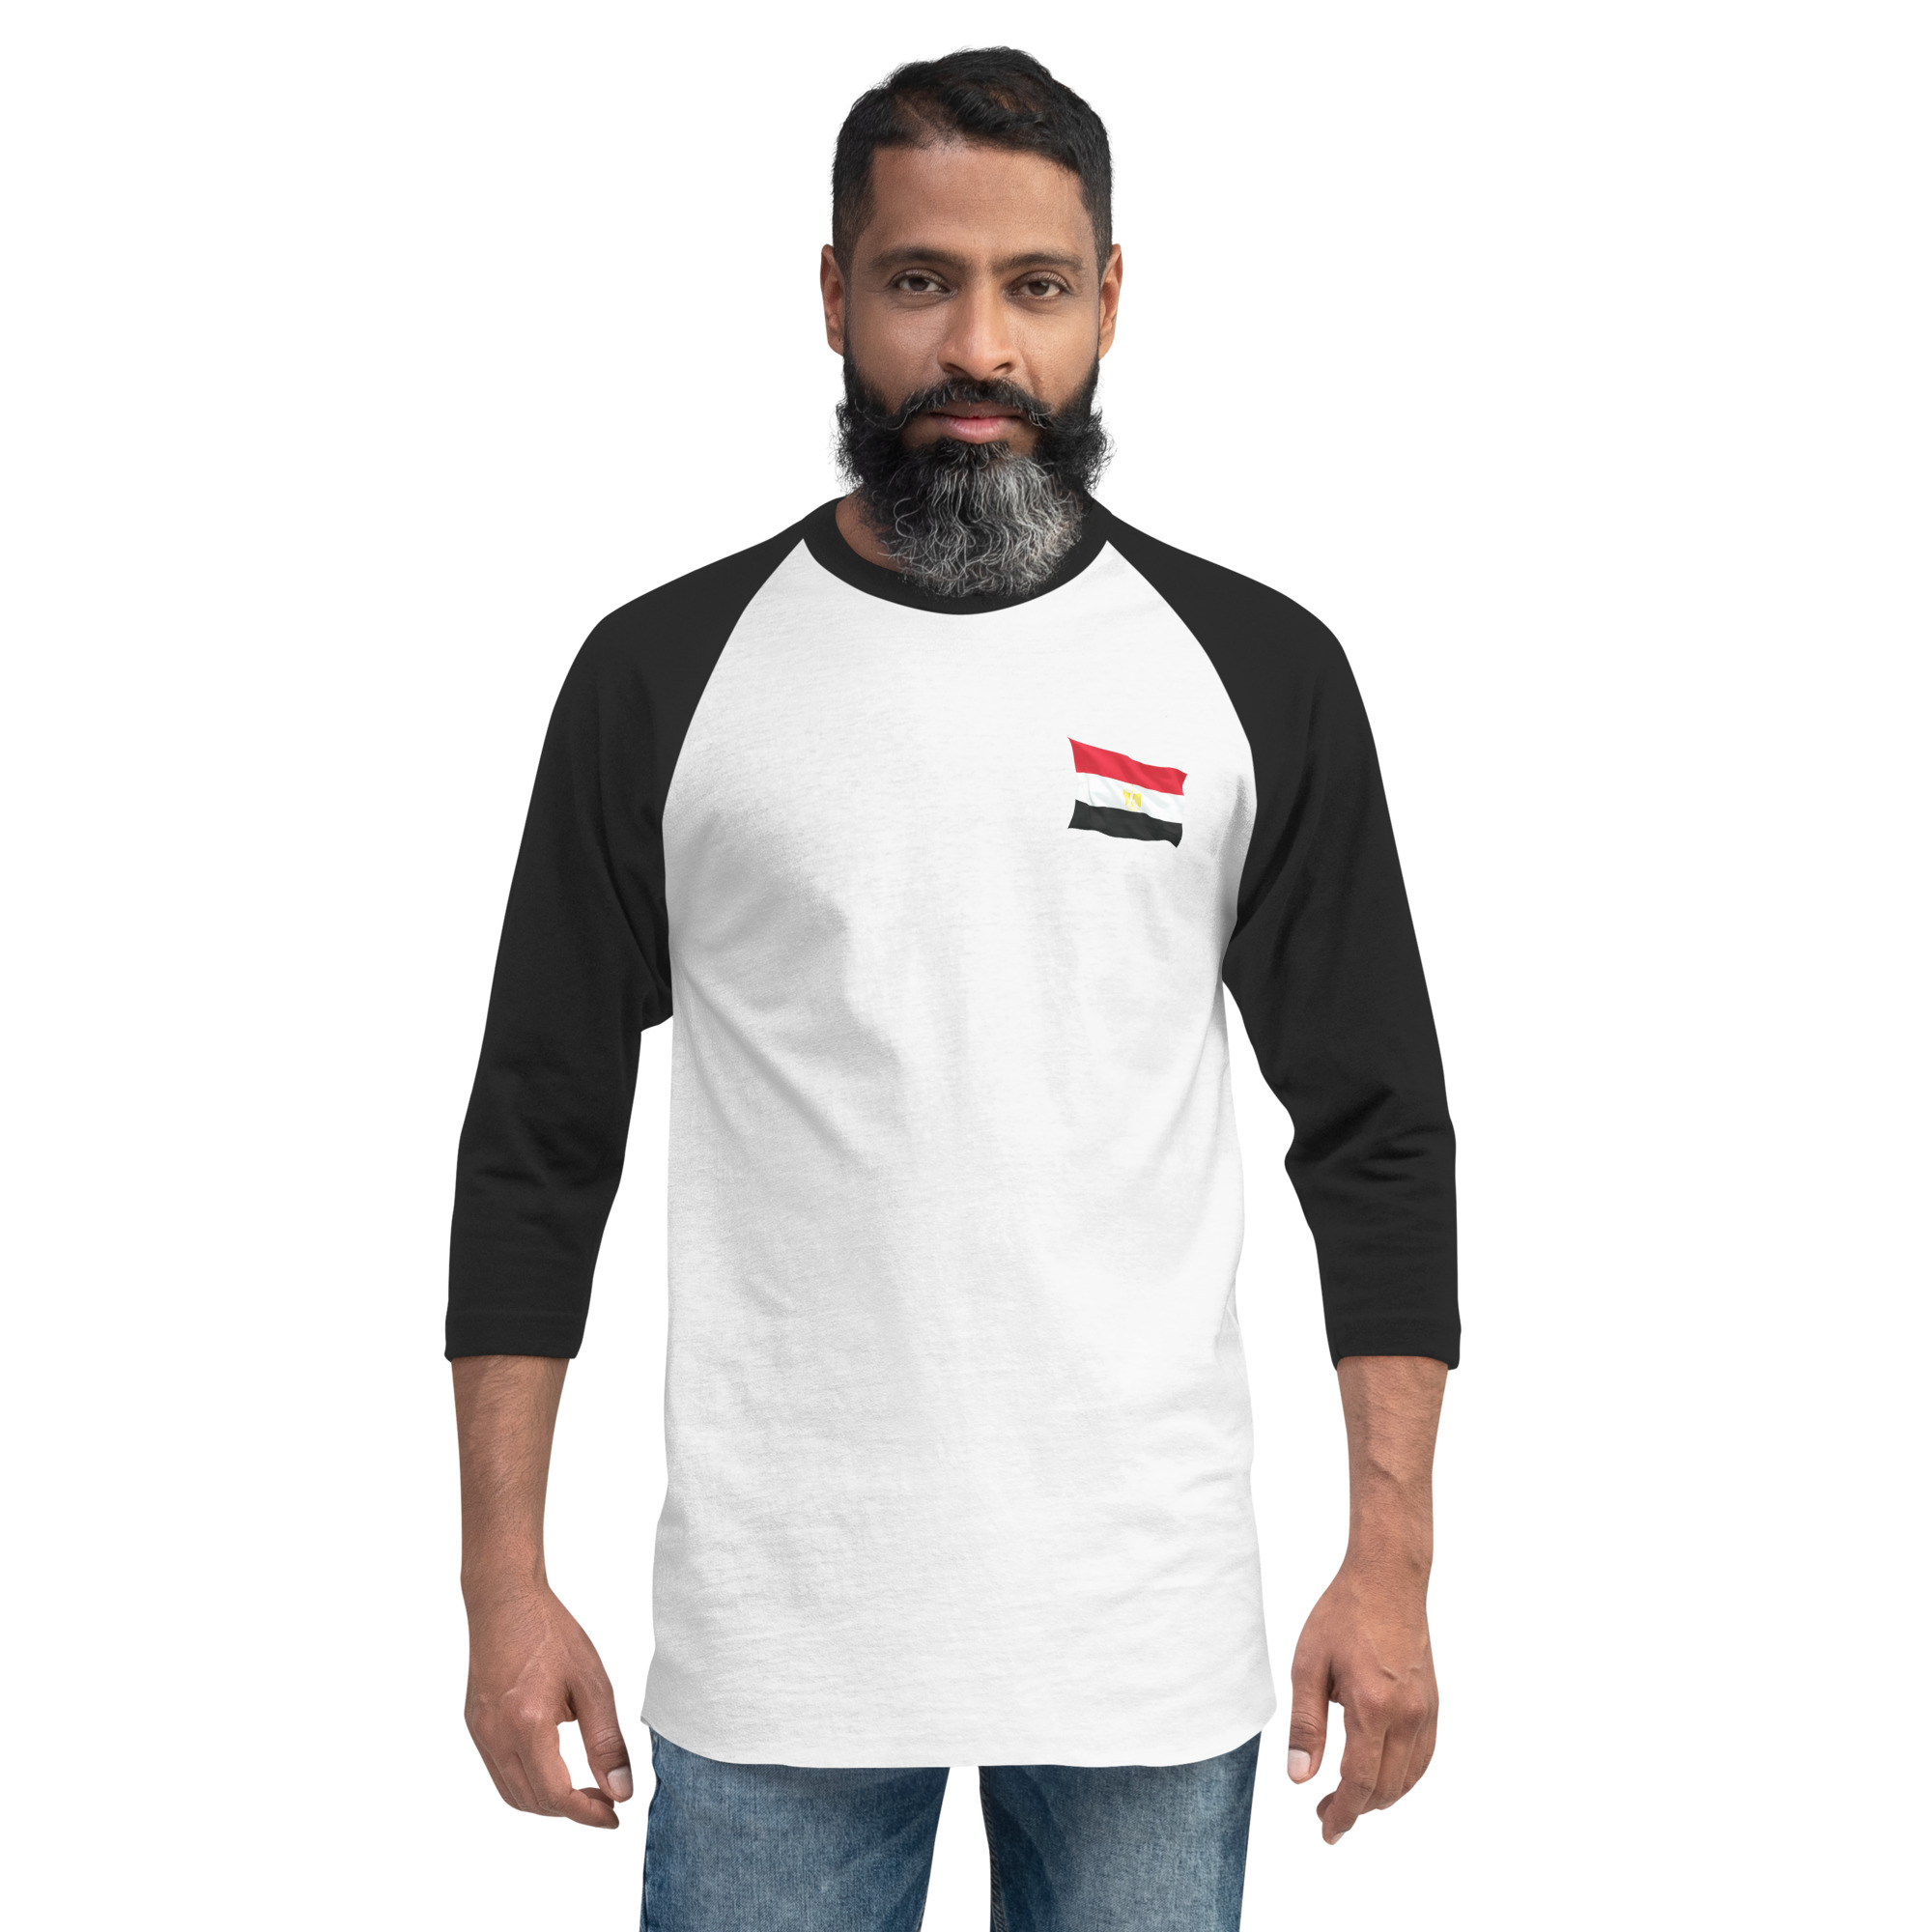 https://hotshirts.com/wp-content/uploads/2022/10/unisex-34-sleeve-raglan-shirt-white-black-front-6338d756d6d6f.jpg